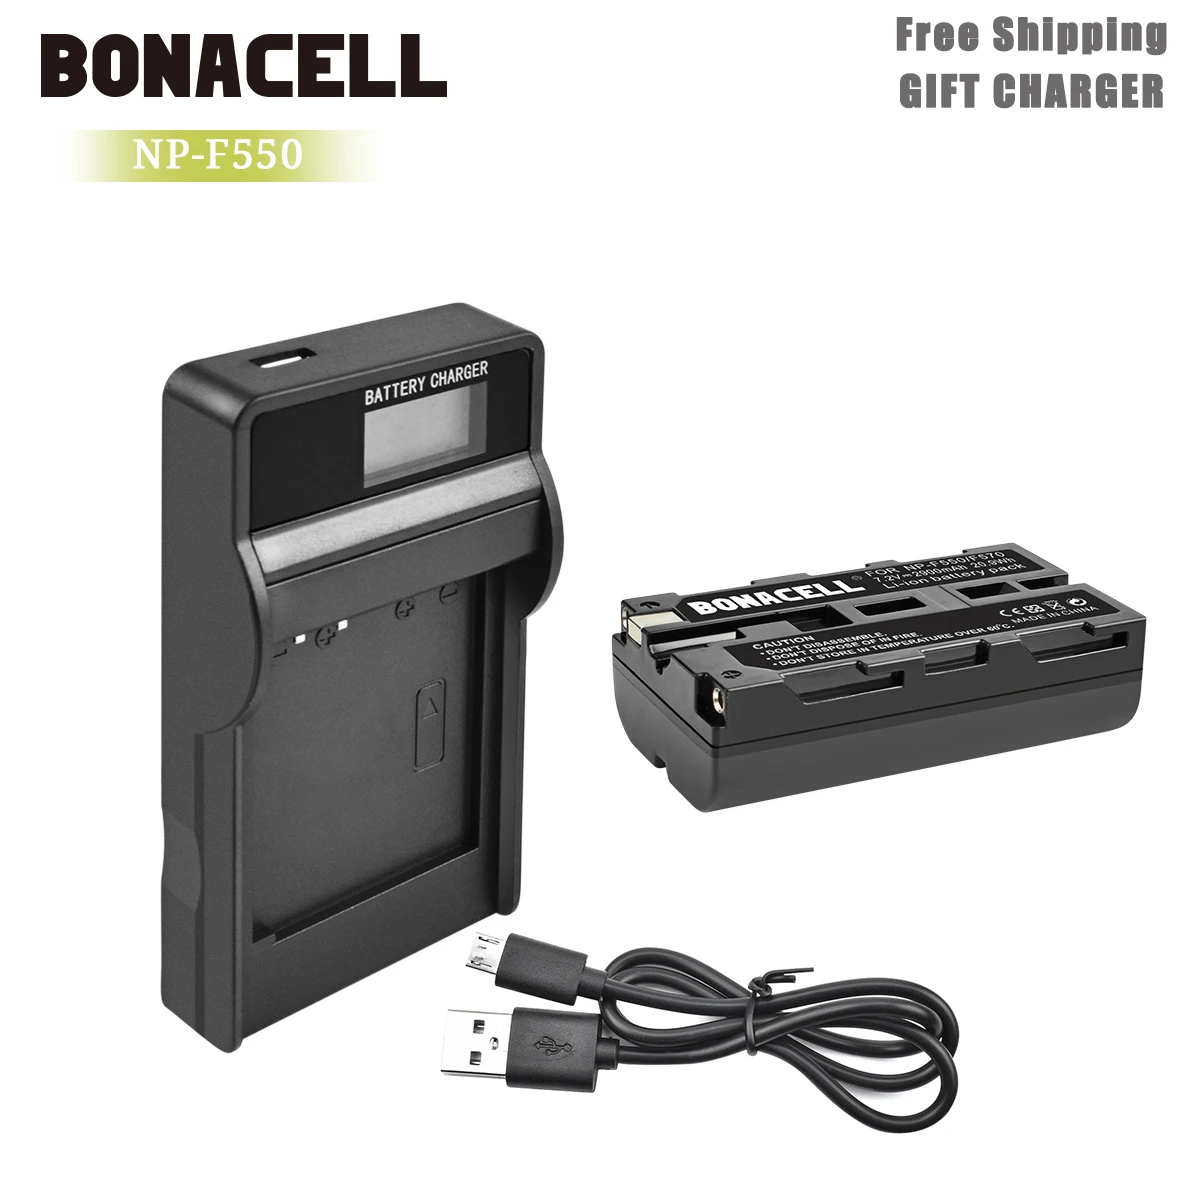 Bonacell 3000 мА/ч, NP-F550 NP F550 NPF550 Батарея+ ЖК-дисплей Зарядное устройство для sony NP-F330 NP-F530 NP-F570 NP-F730 NP-F750 Hi-8 GV-D200 L50